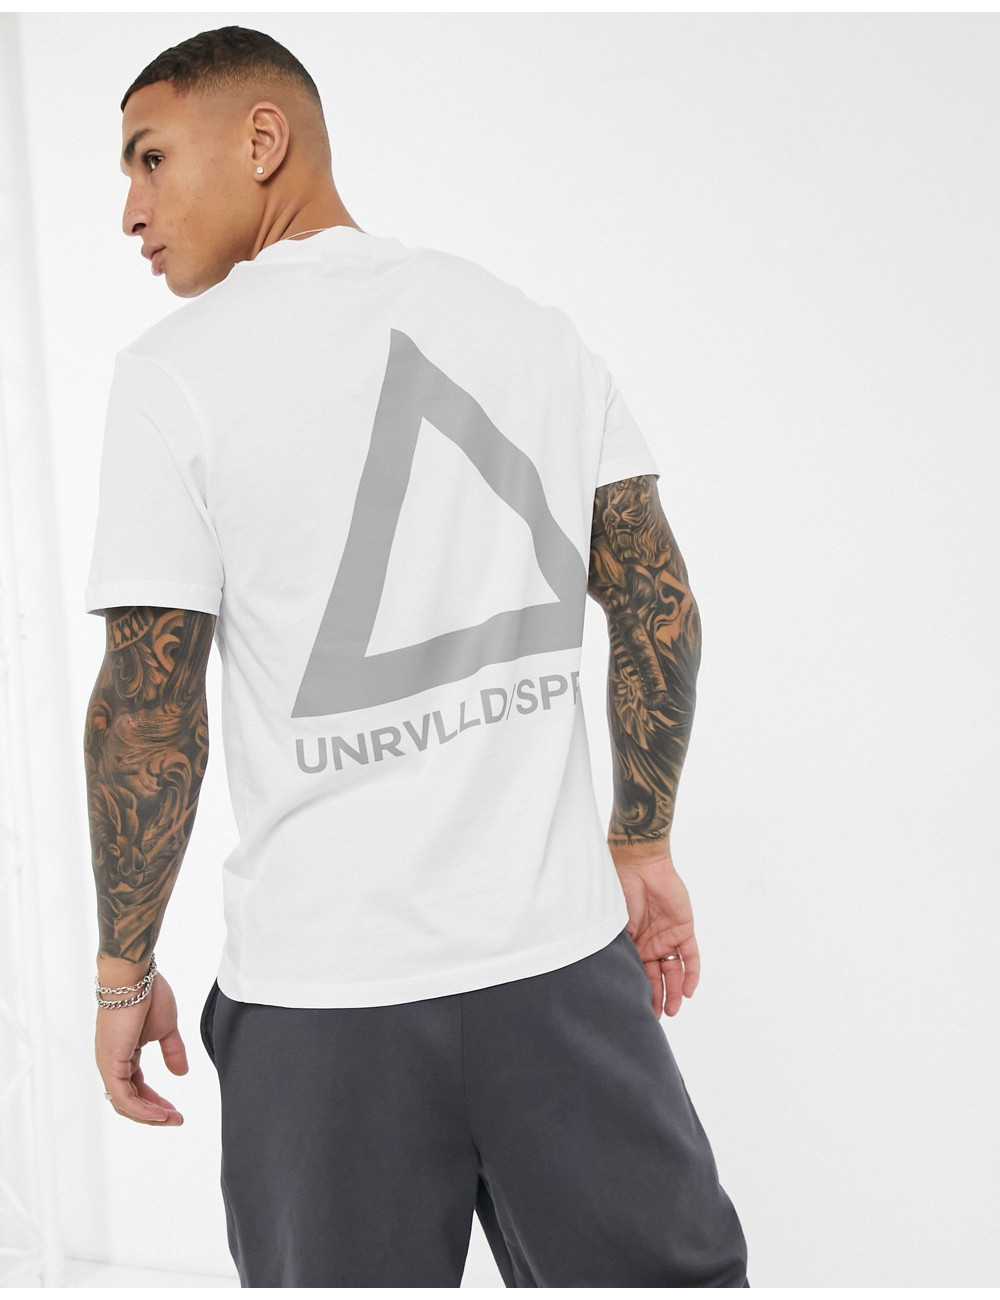 ASOS Unrvlld Spply t-shirt...